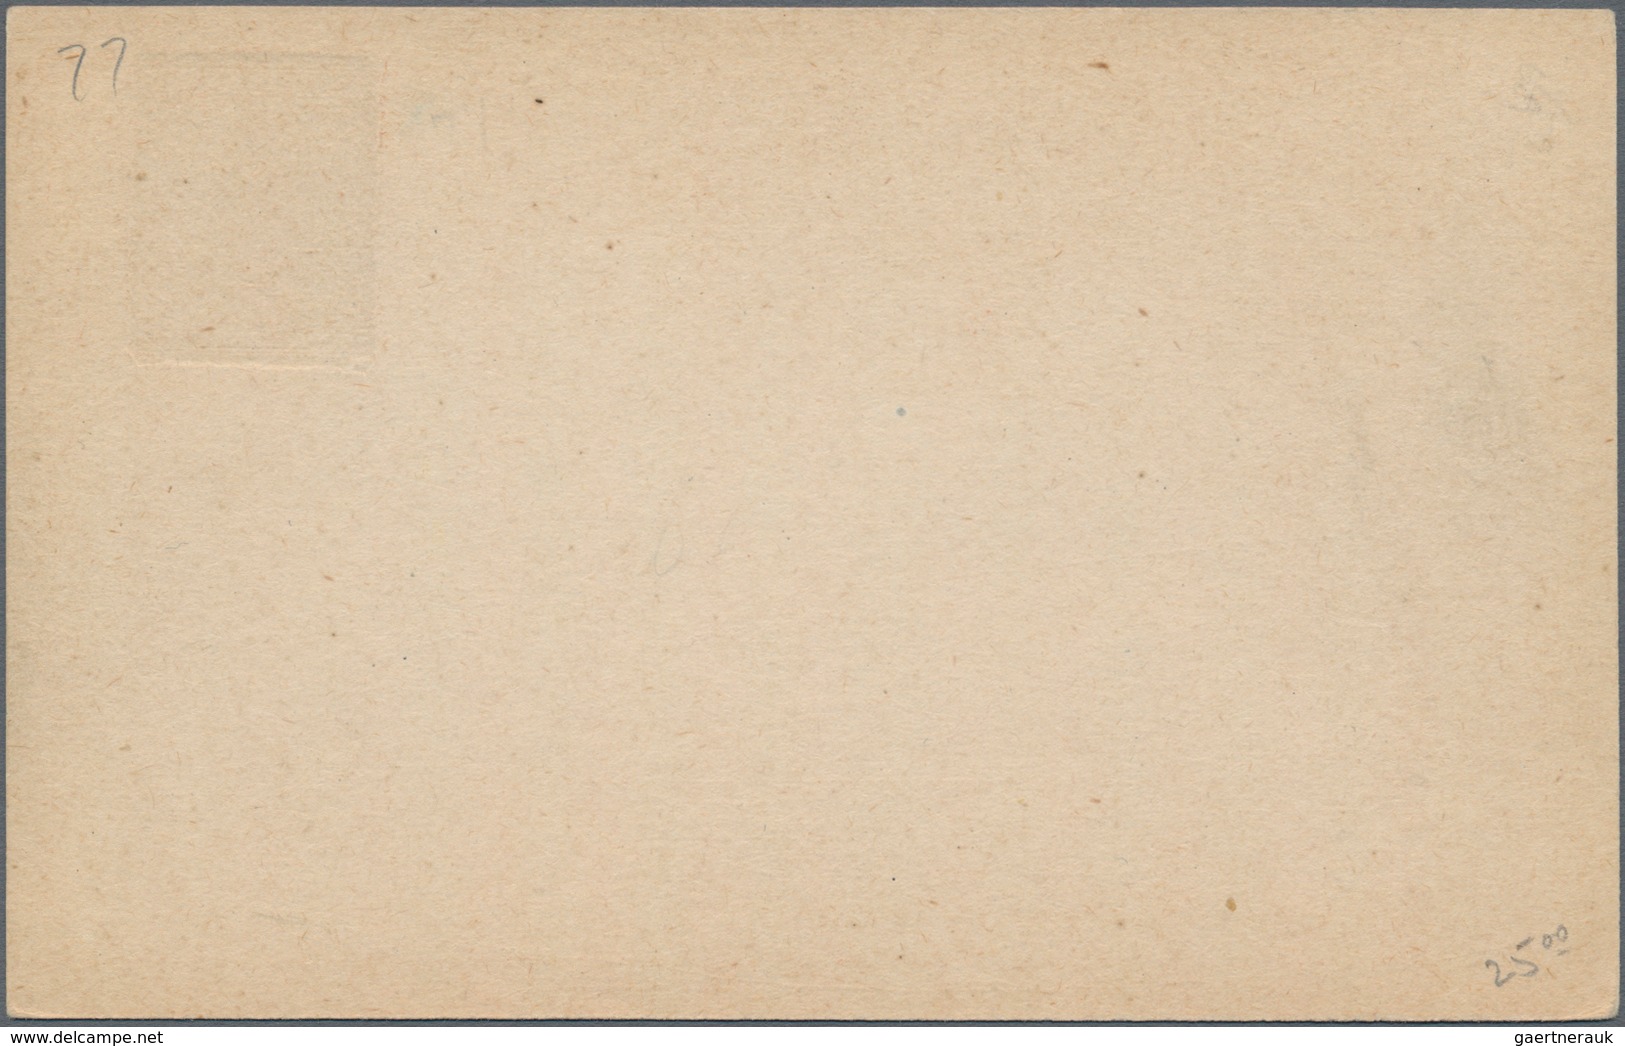 Mexiko - Ganzsachen: 1895, four unused postal stationery cards 2 centavos carmine and 3 centavos bro